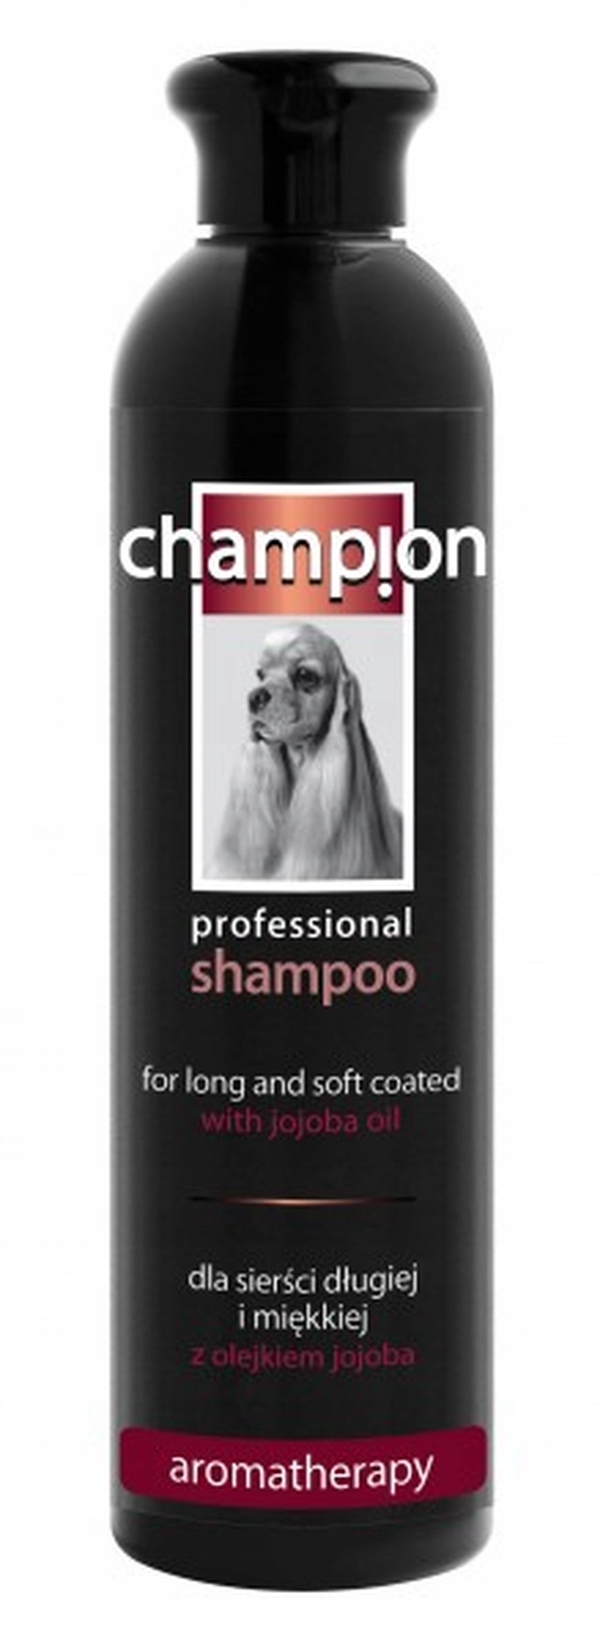 szampon champion allegro